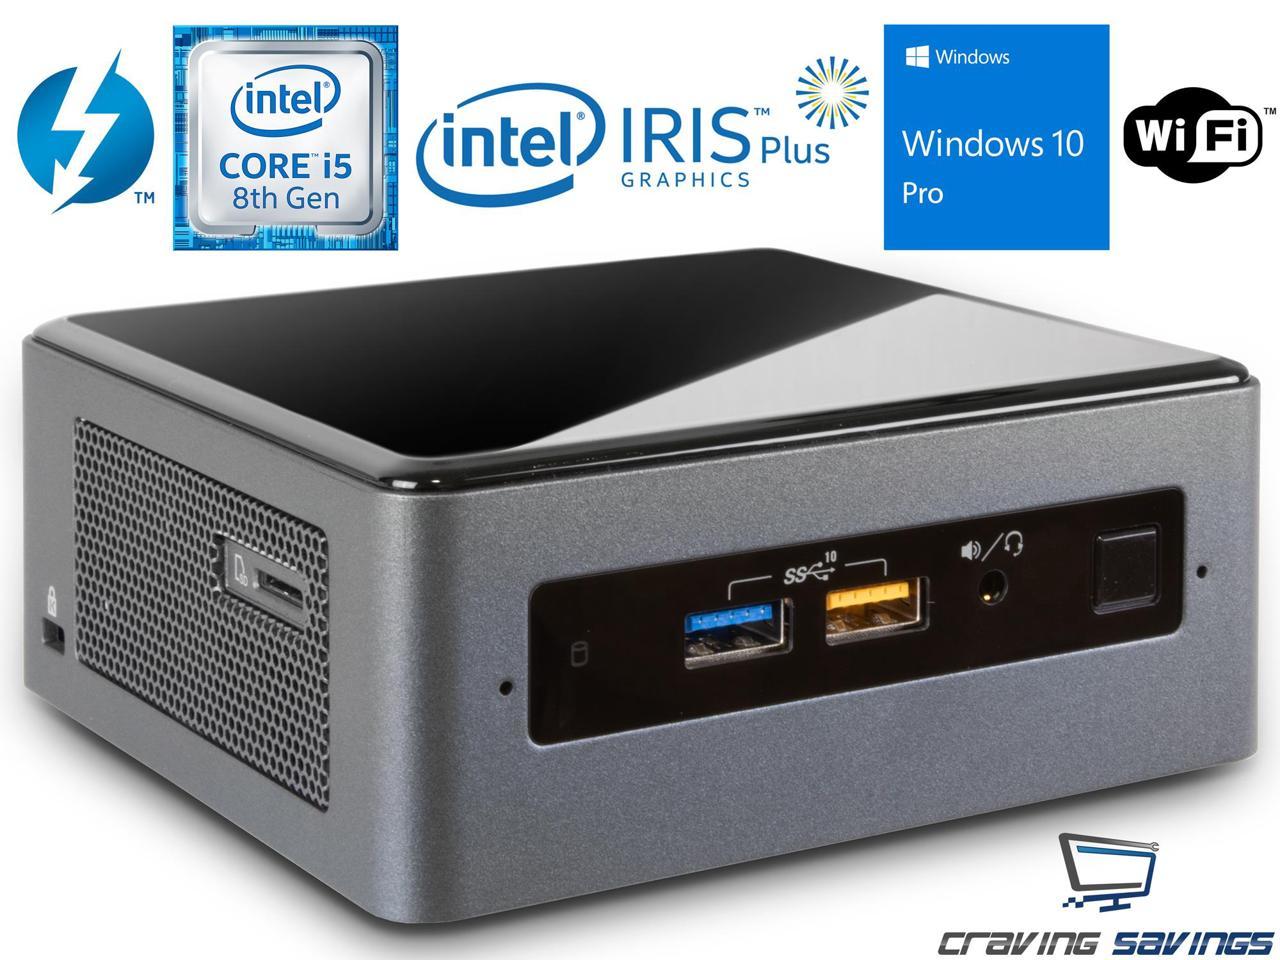 Intel NUC8i5BEH Mini PC/HTPC, Intel Core i5-8259U Up to 3.8GHz, 16GB DDR4, 256GB NVMe SSD, Wifi, Bluetooth 5.0, 4K Support, Dual Monitor Capable, Windows 10 Pro